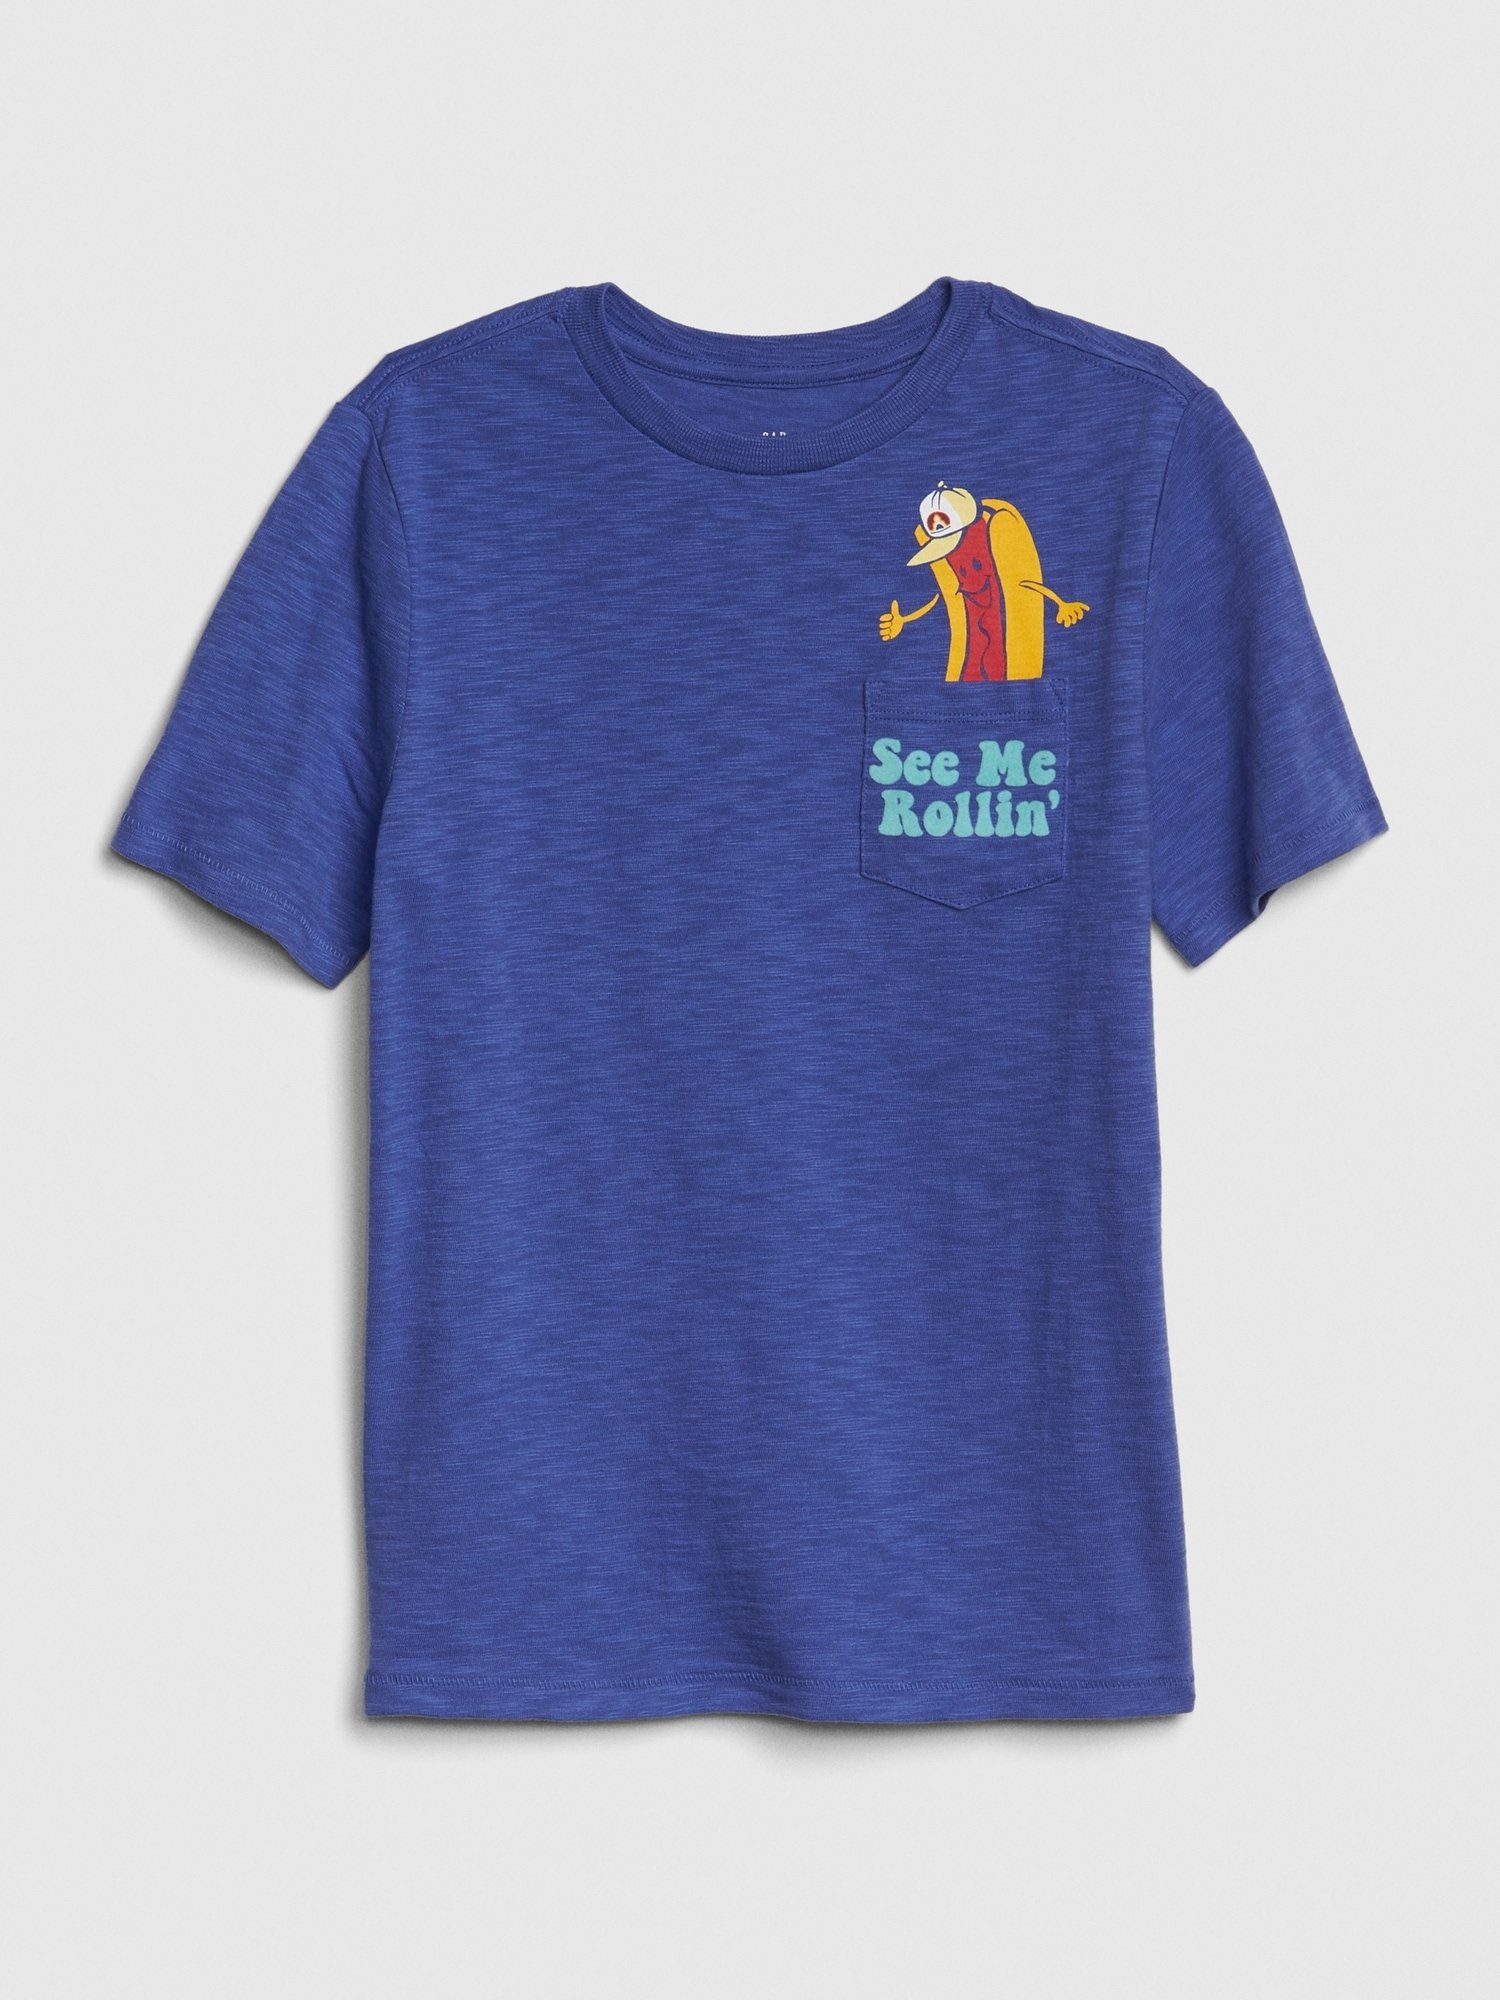 Erkek Çocuk Grafik Kısa Kollu T-Shirt product image